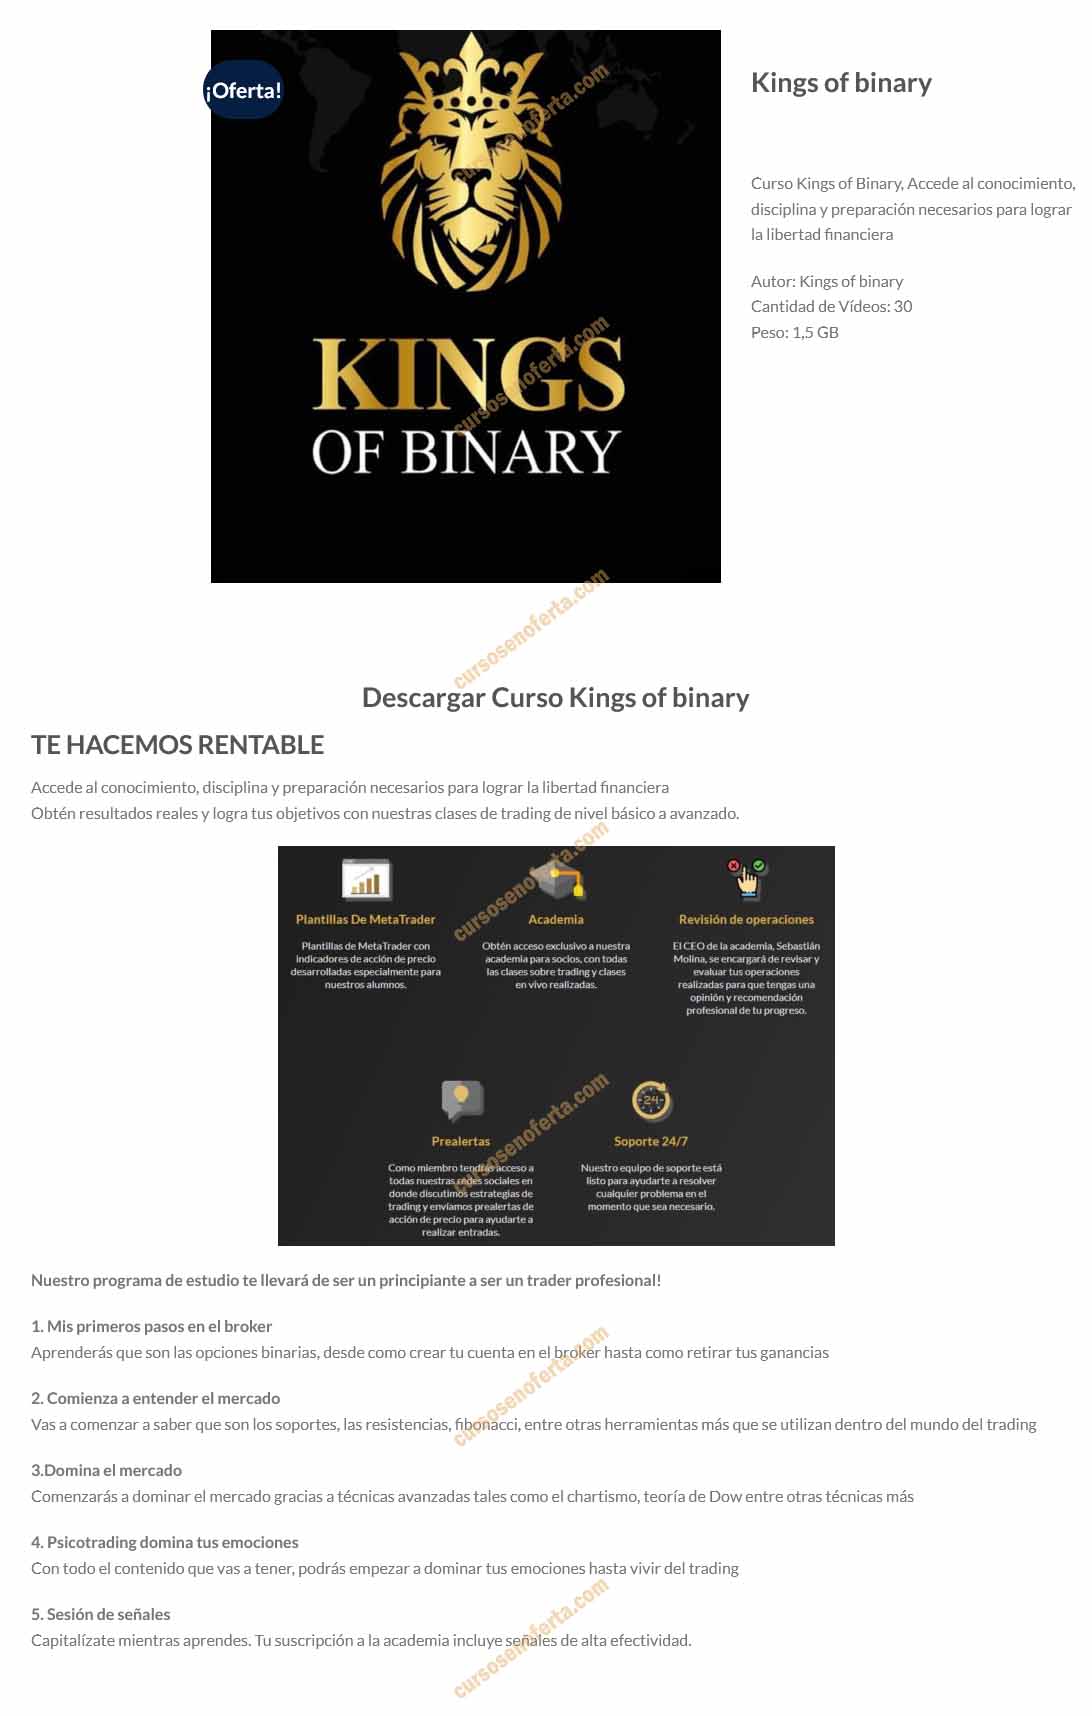 Kings of Binary Academy